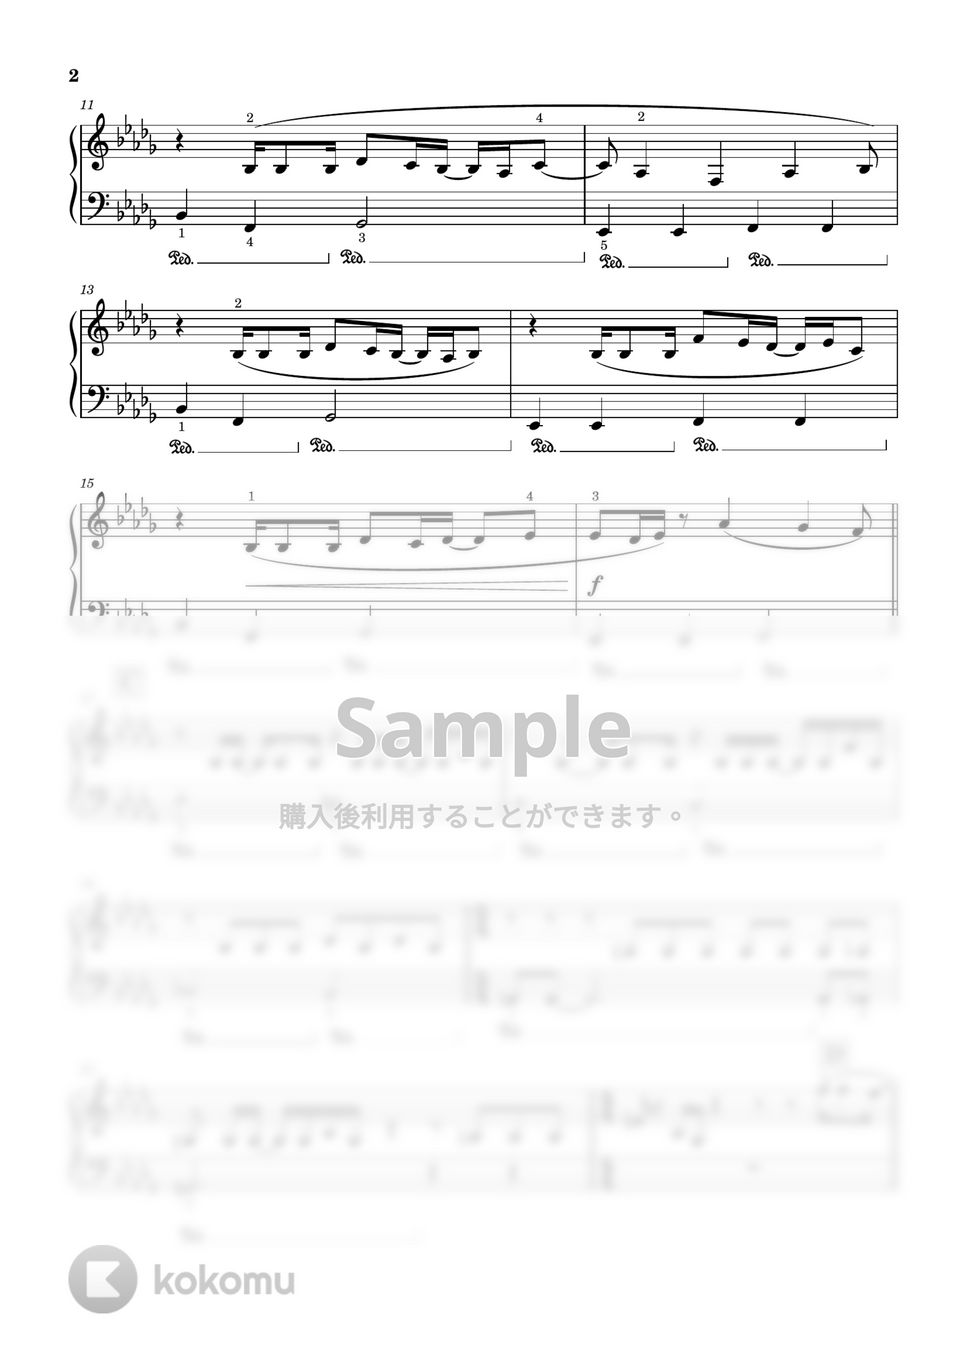 millennium parade×椎名林檎 - WORK (地獄楽/初級レベル) by Saori8Piano